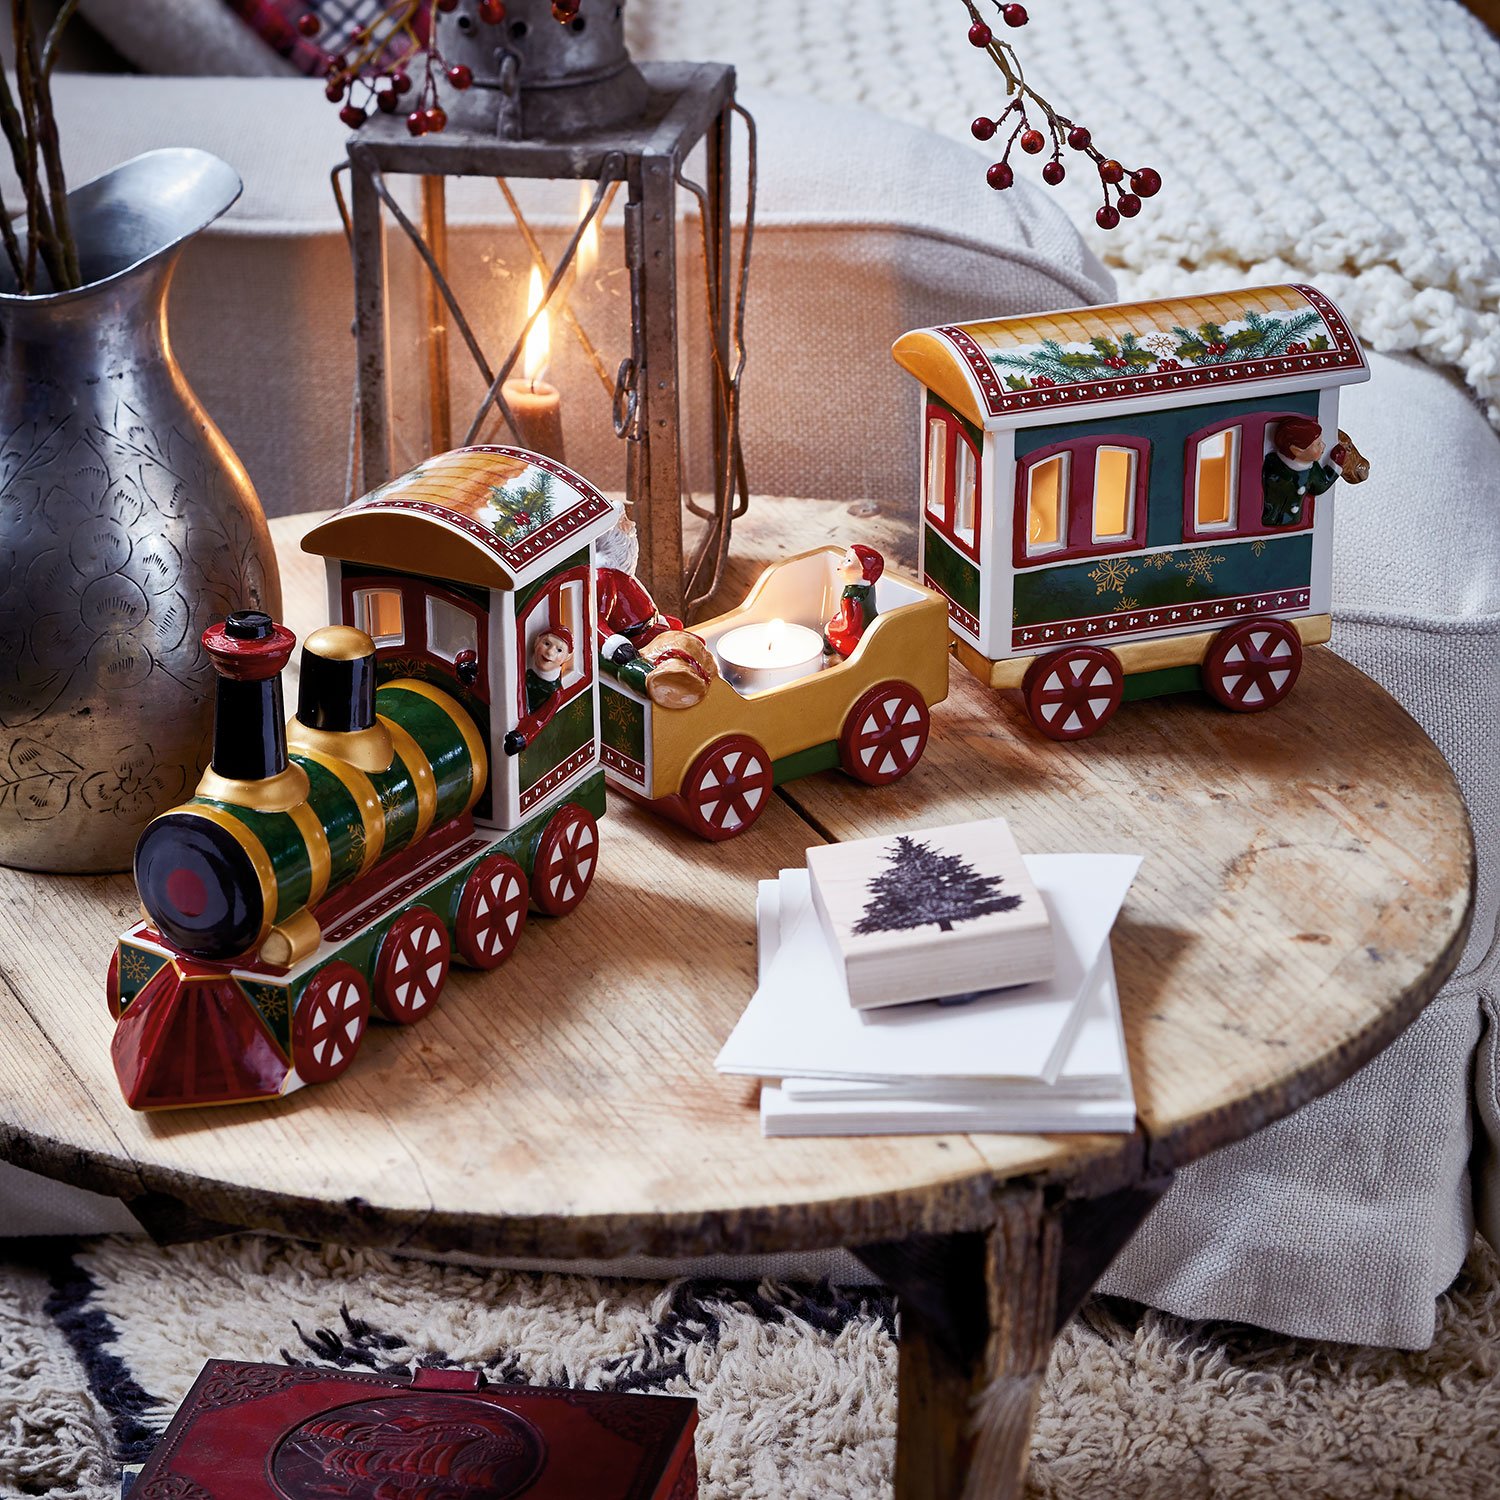 Christmas Toys Memory Фигурка " Северный экспресс" 55 см Villeroy & Boch
https://spb.v-b.ru
г.Санкт-Петербург
eshop@v-b.spb.ru
+7(812)3801977